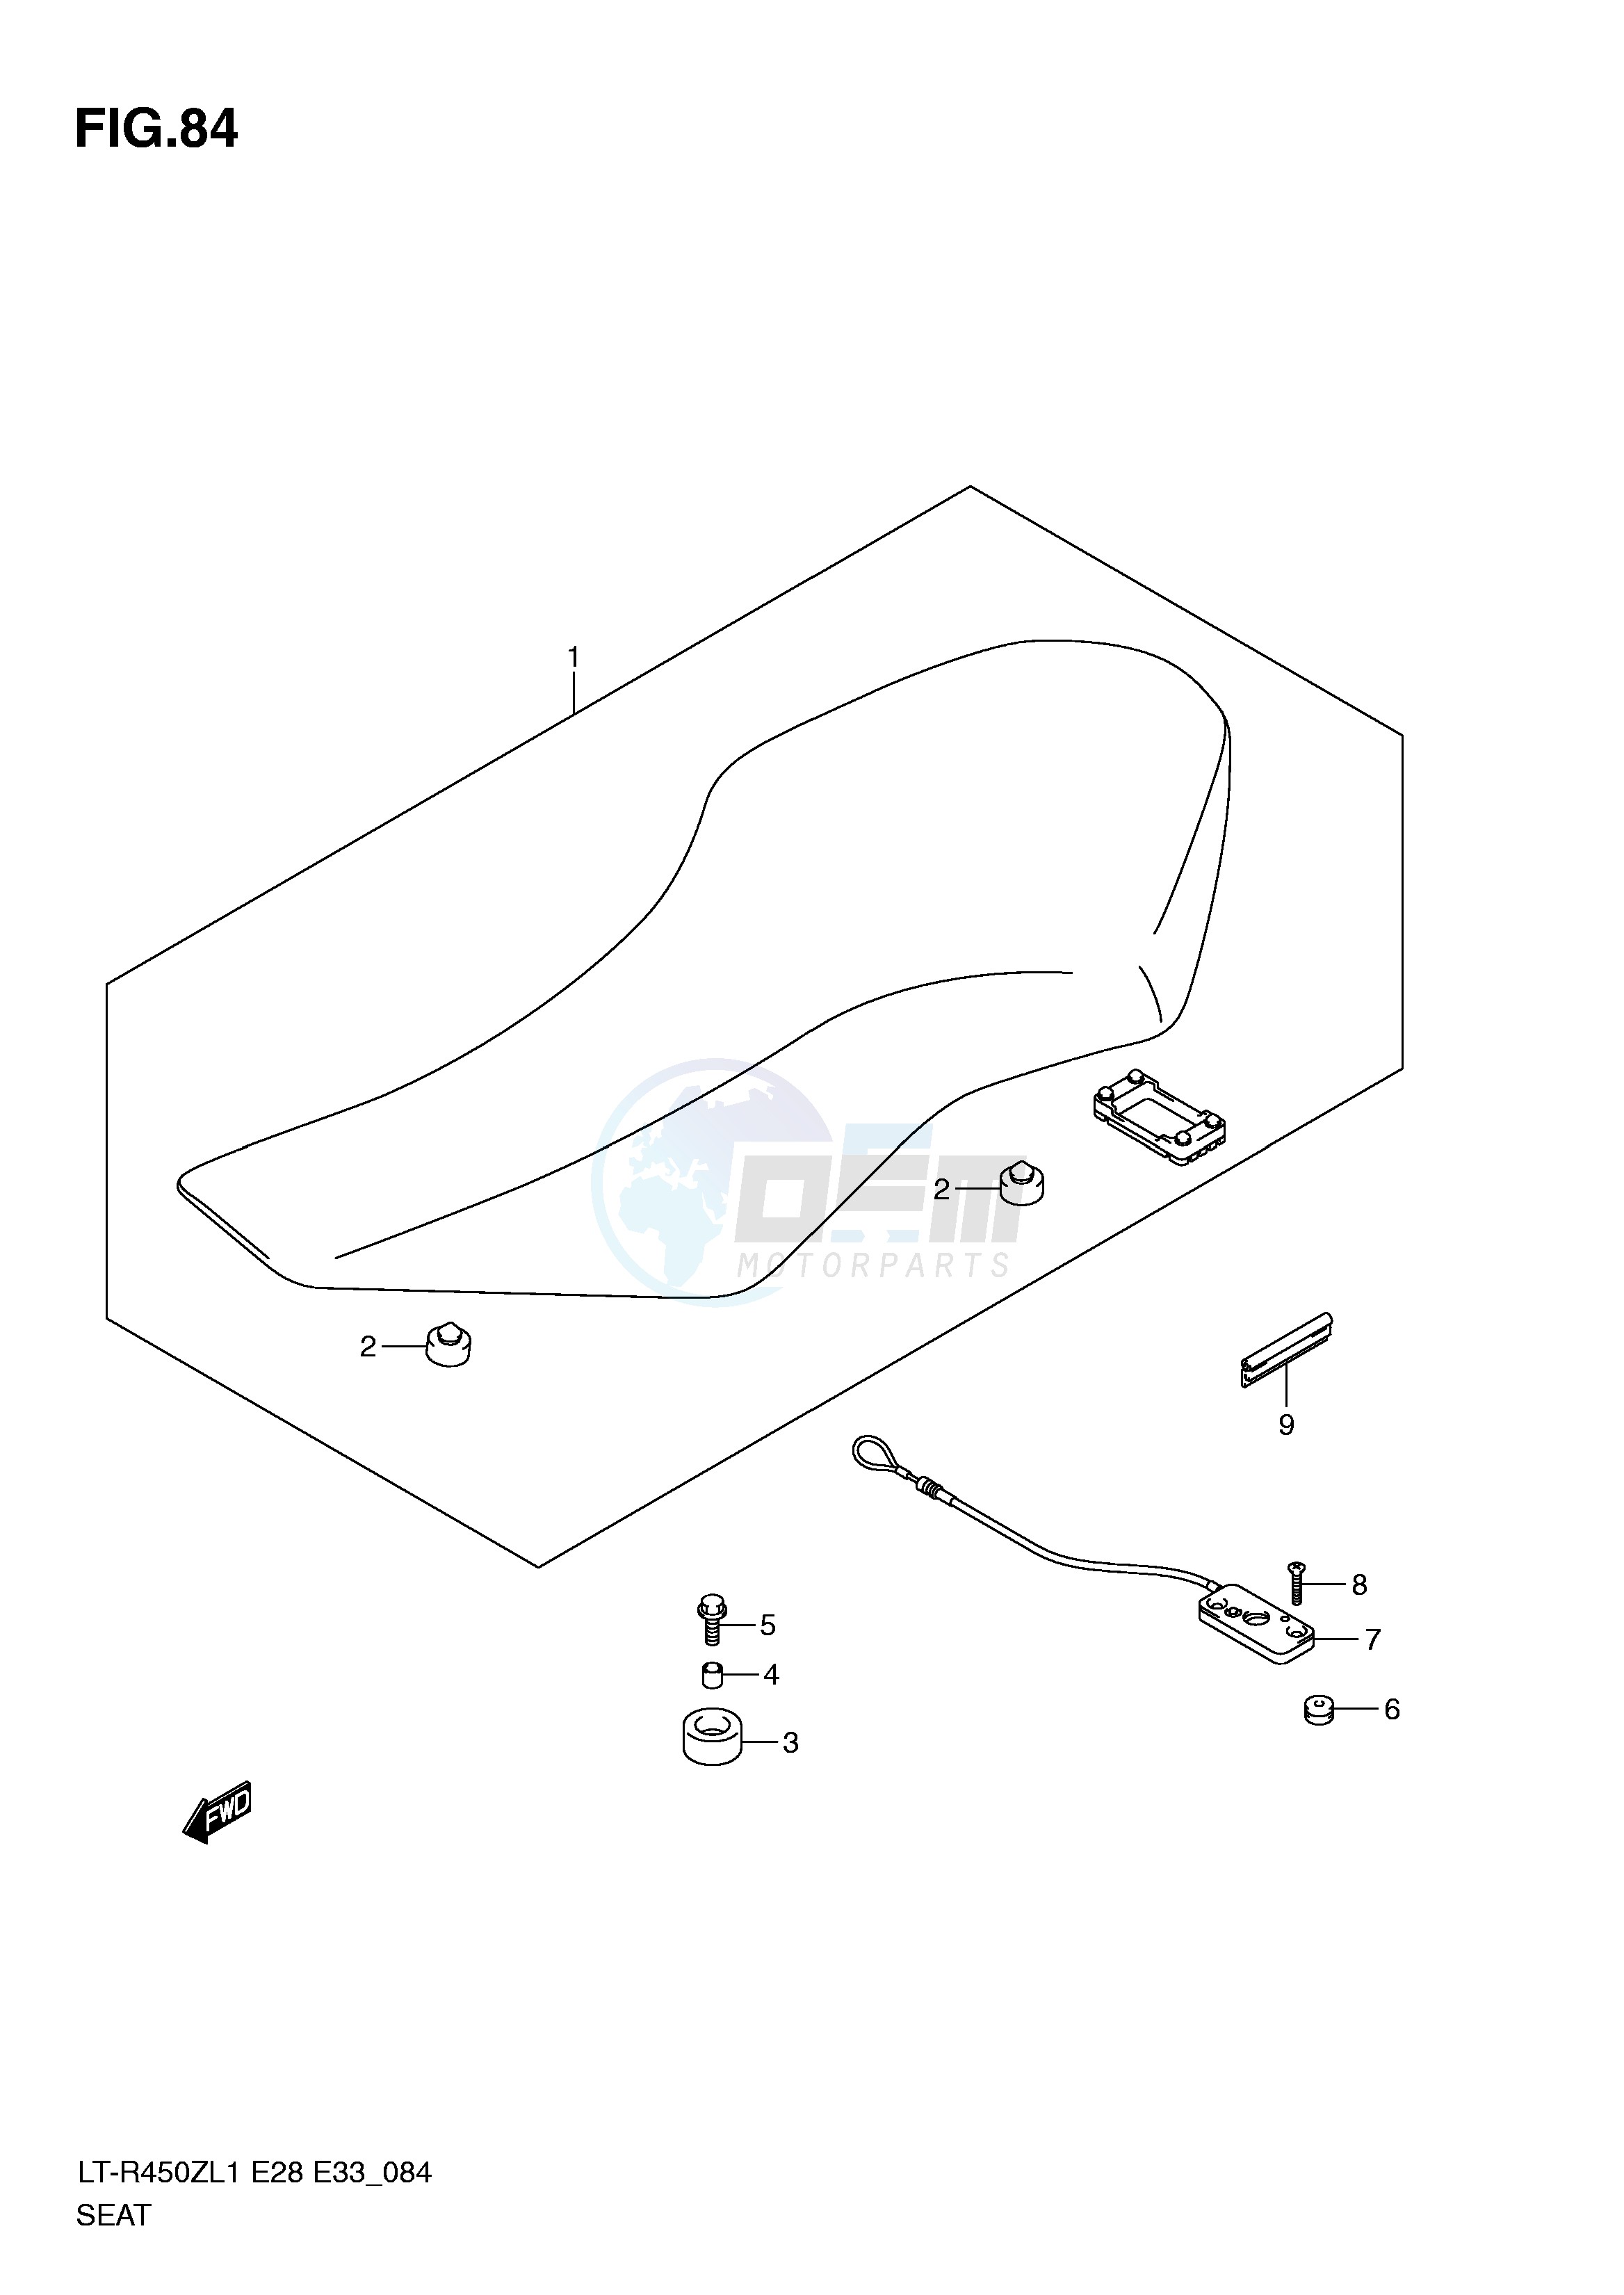 SEAT (LT-R450L1 E28) blueprint